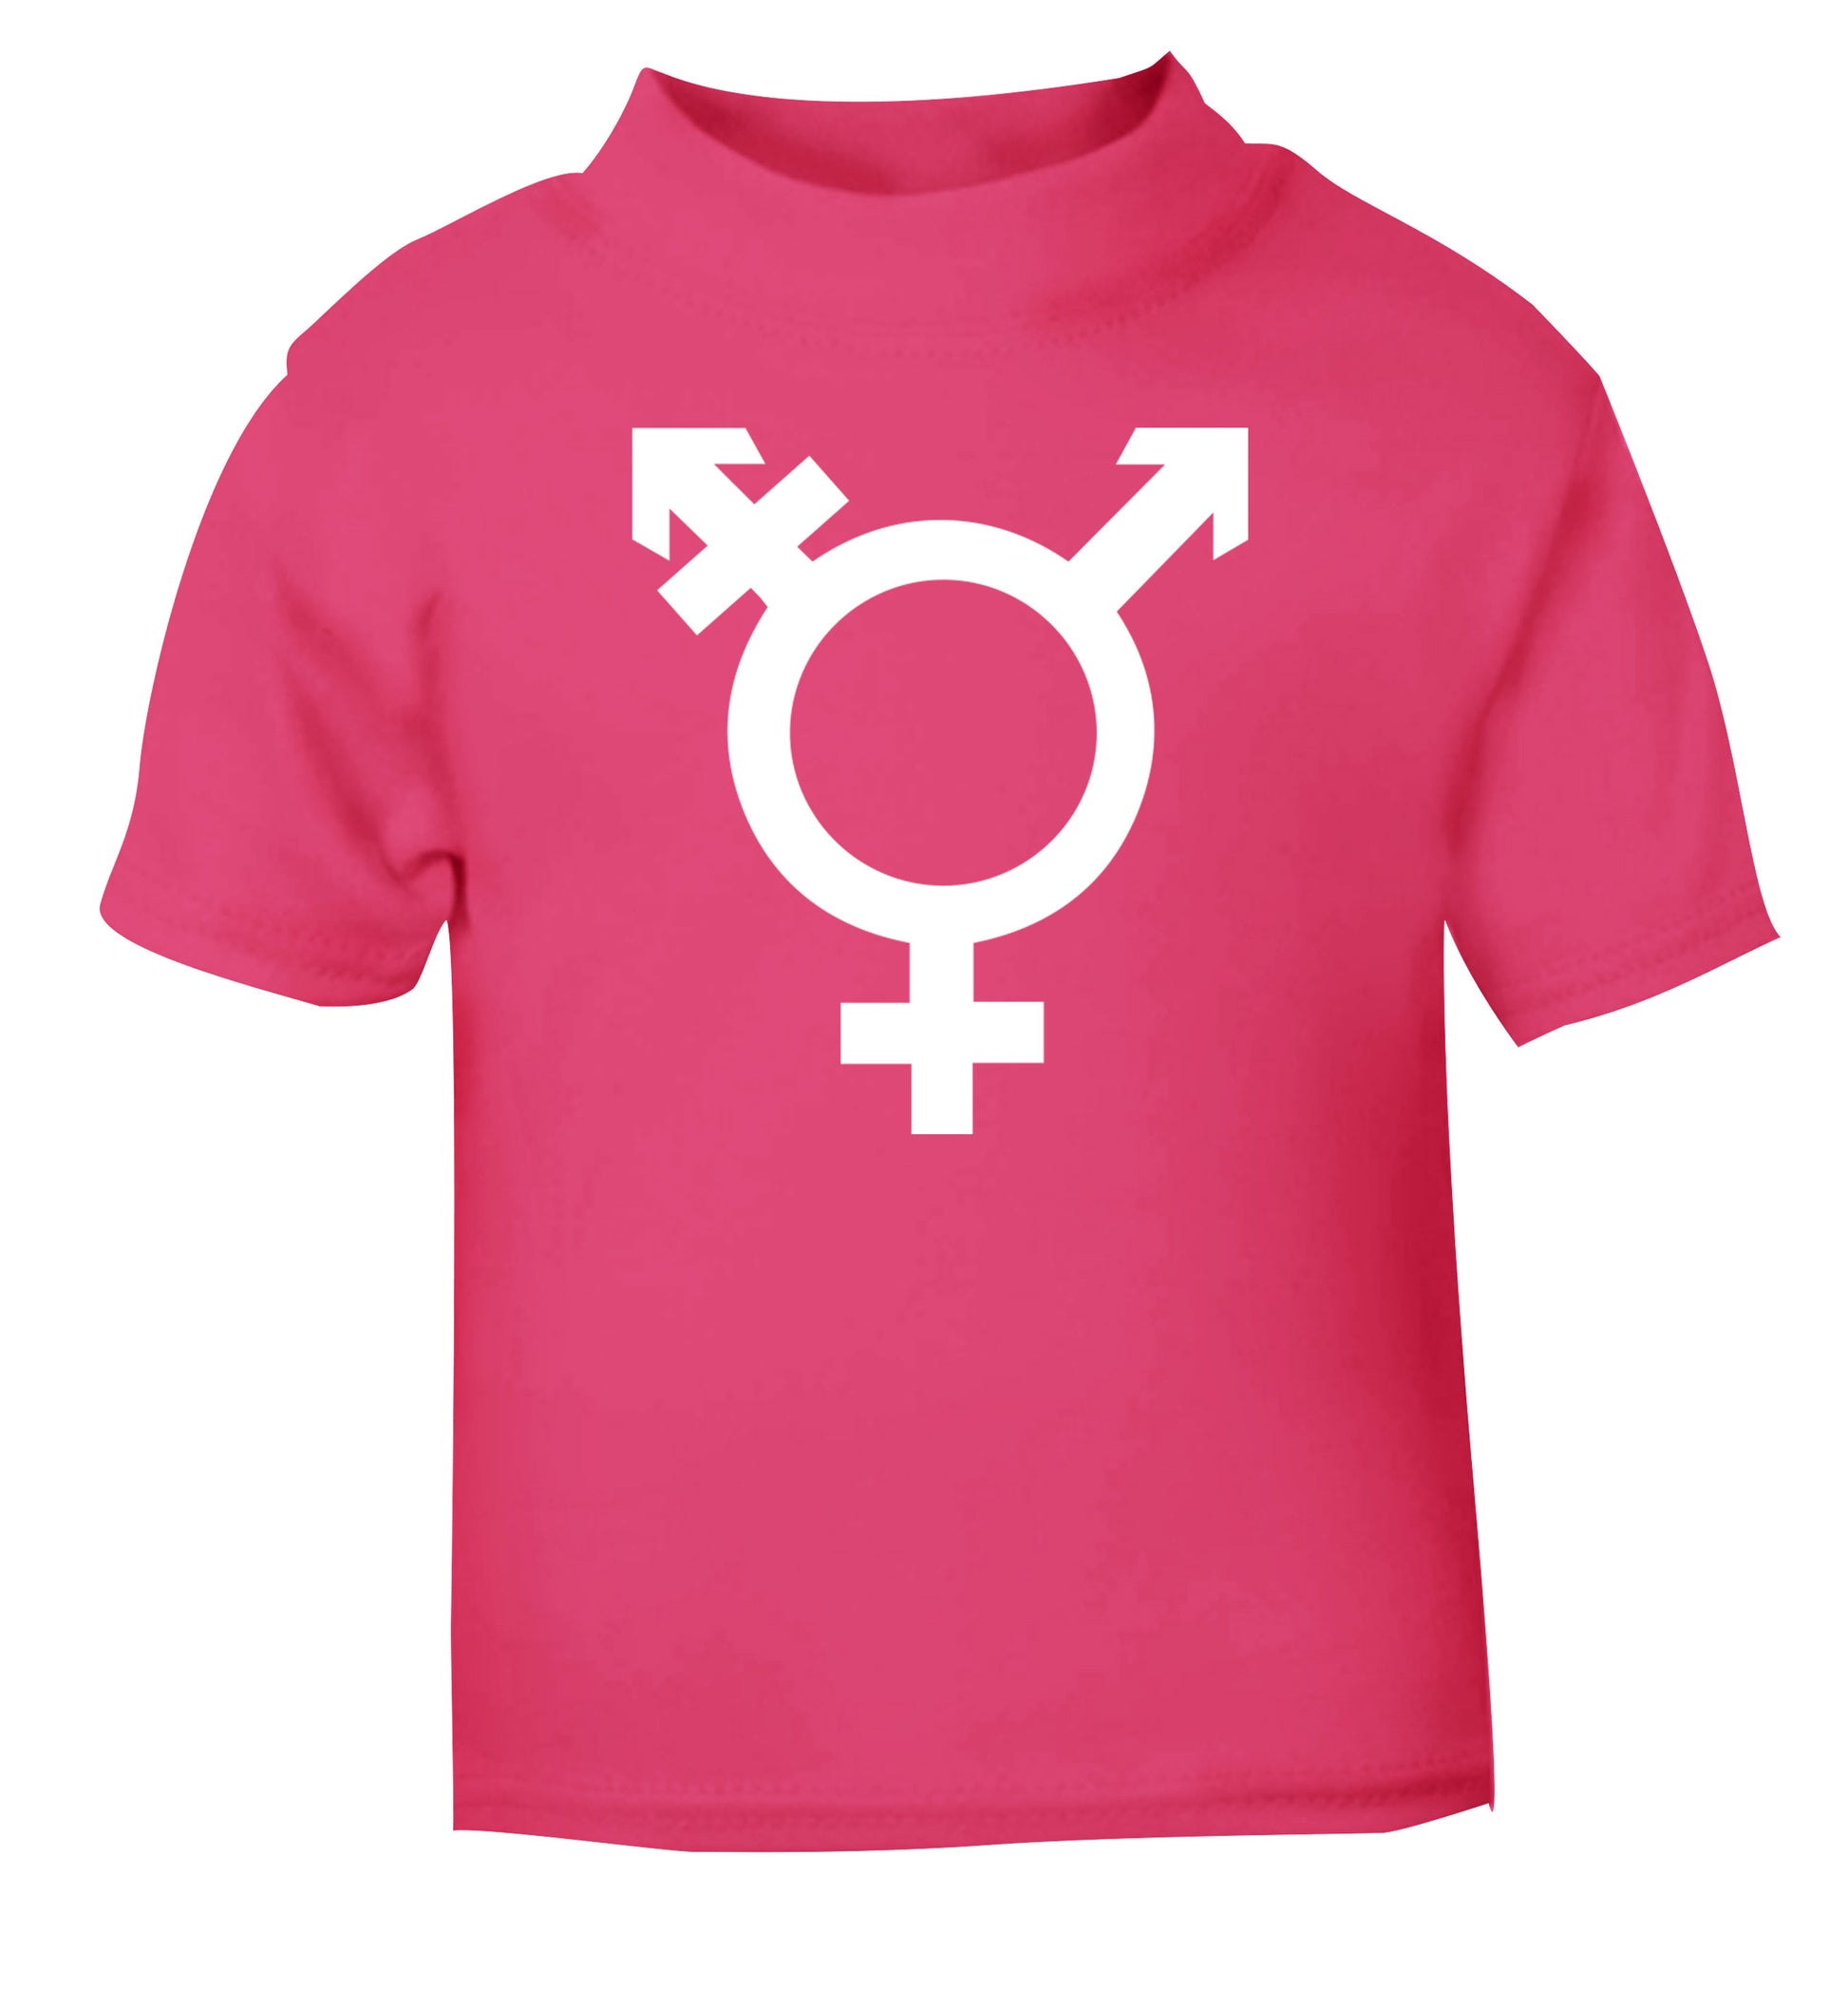 Gender neutral symbol large pink Baby Toddler Tshirt 2 Years